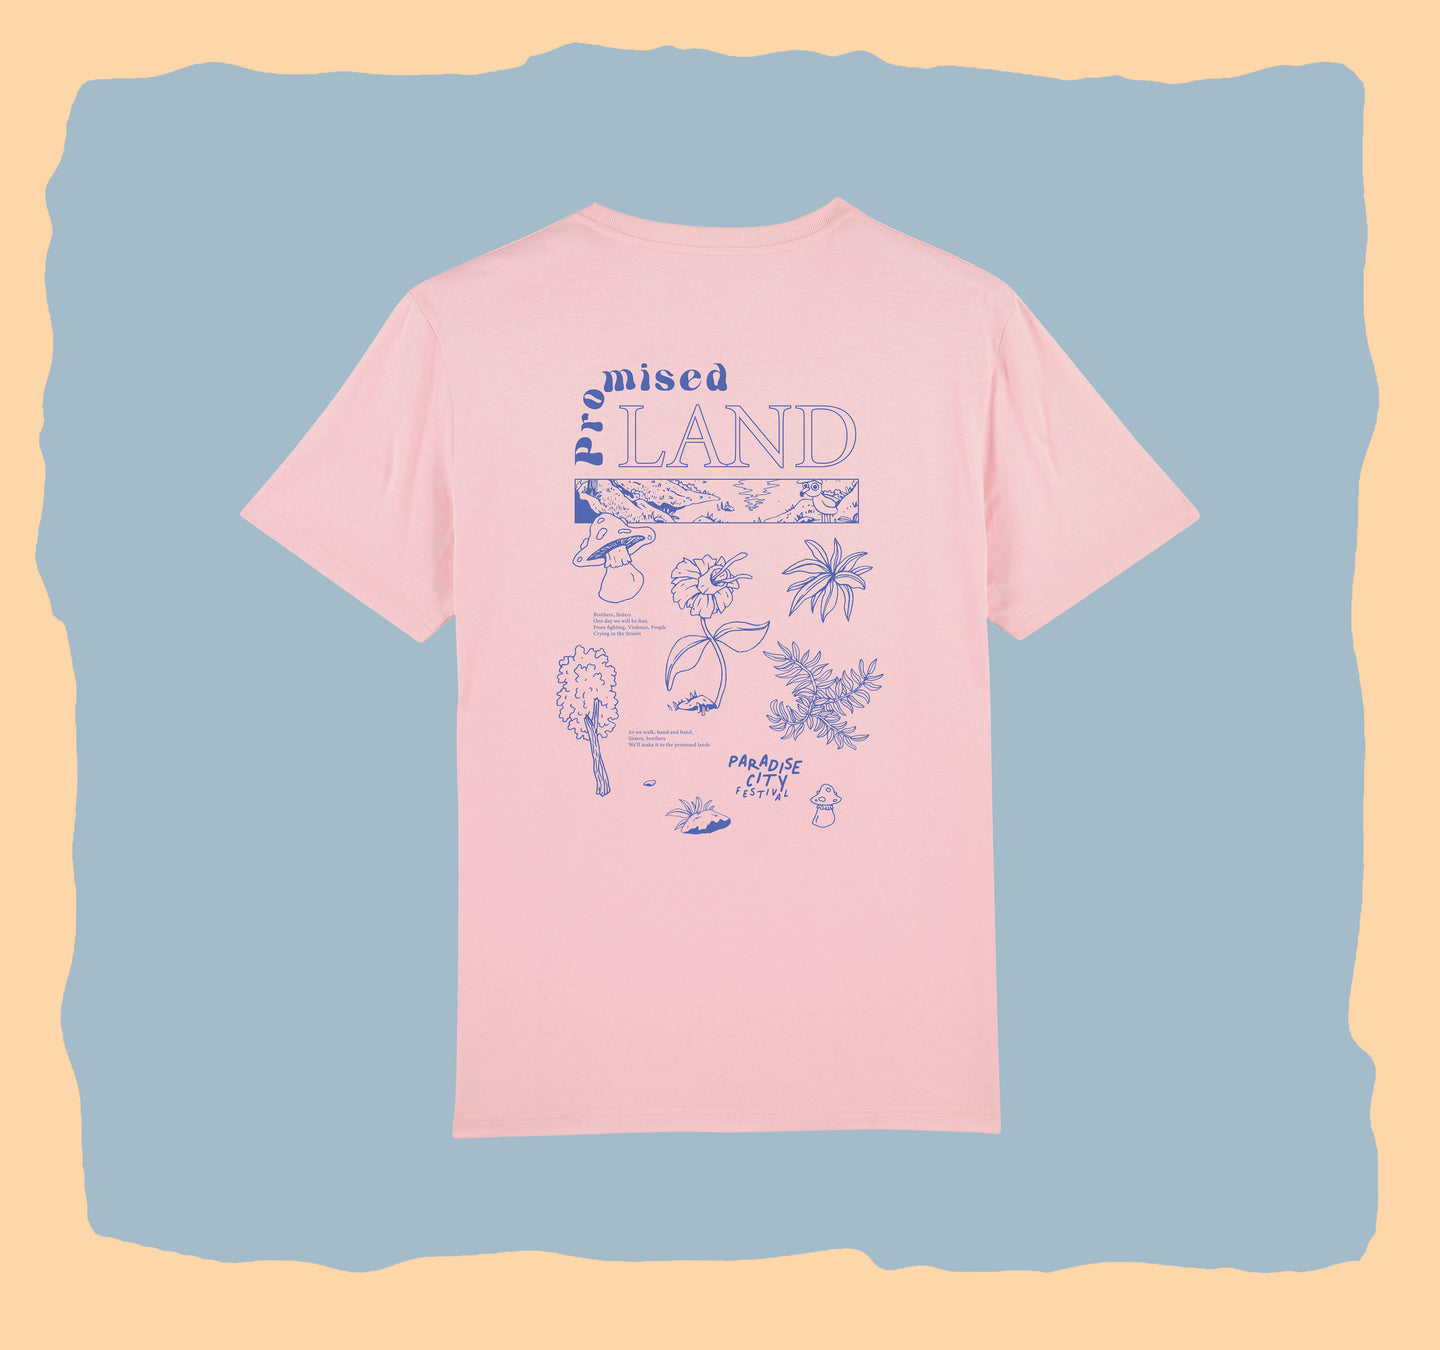 Promised Land T-shirt